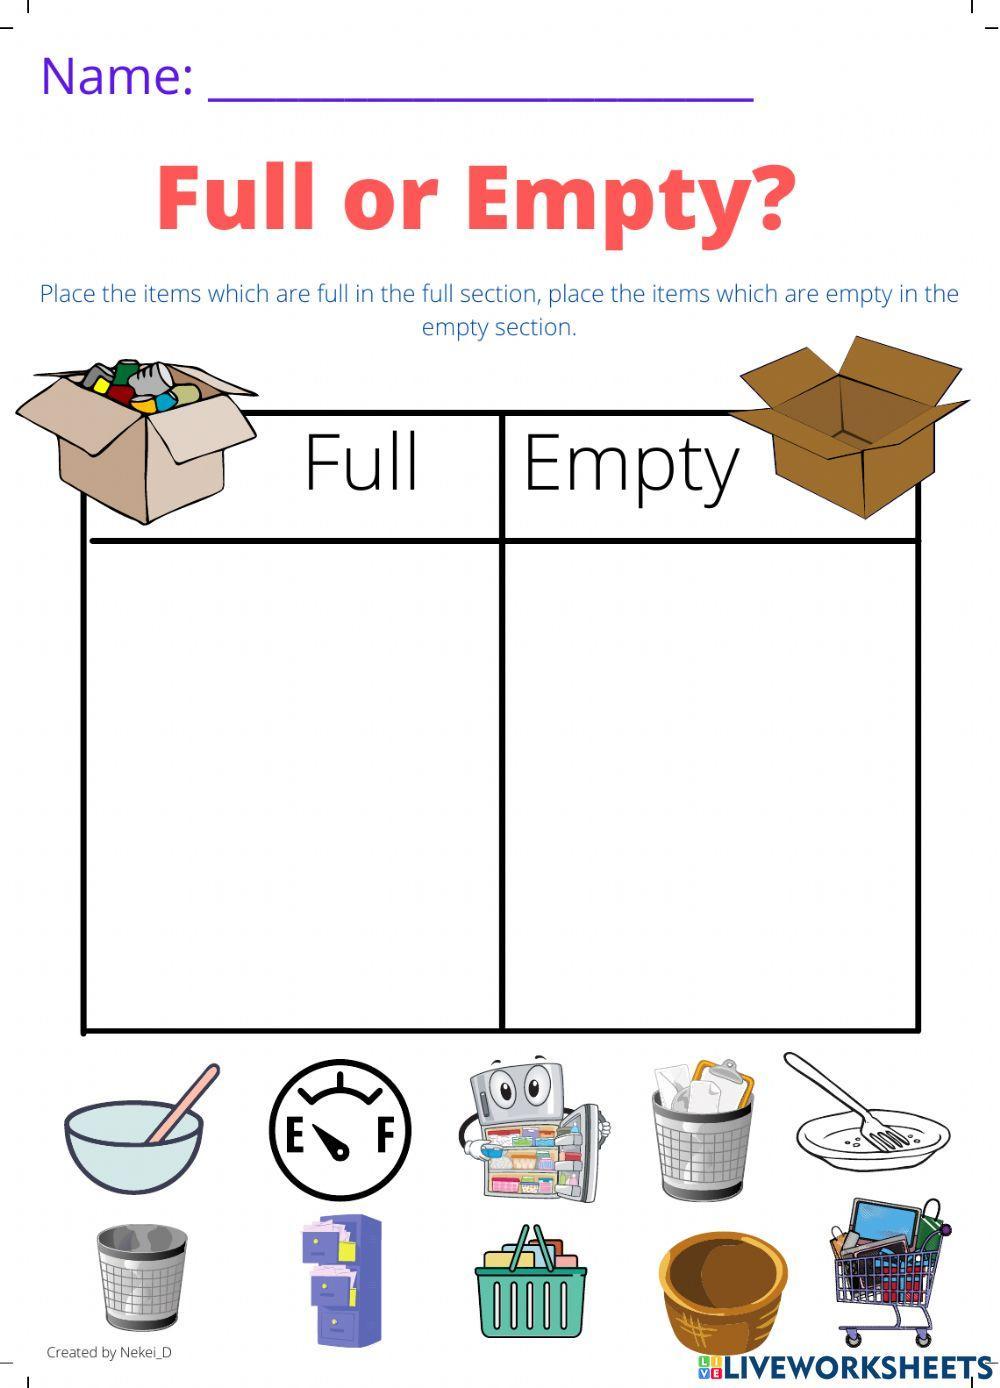 Full or Empty